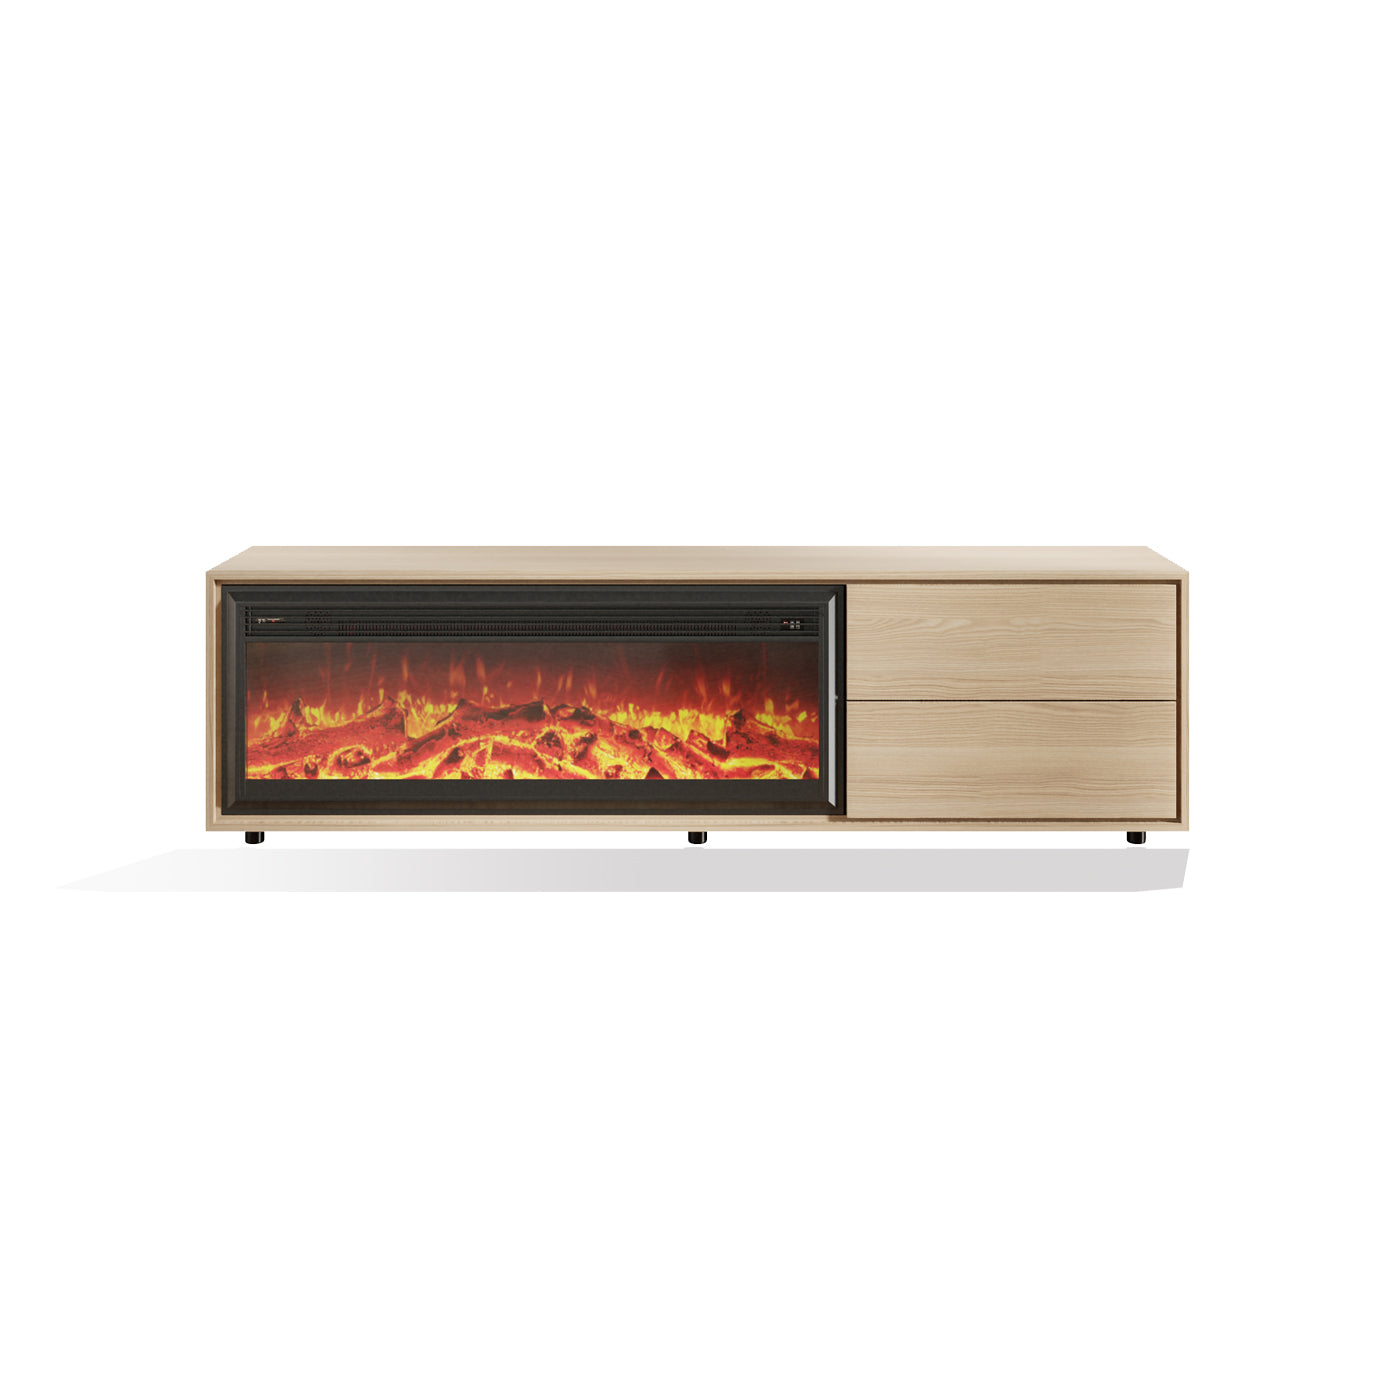 2 Storage Walnut+Ash Wood Electronic Simulation Heating Fireplace